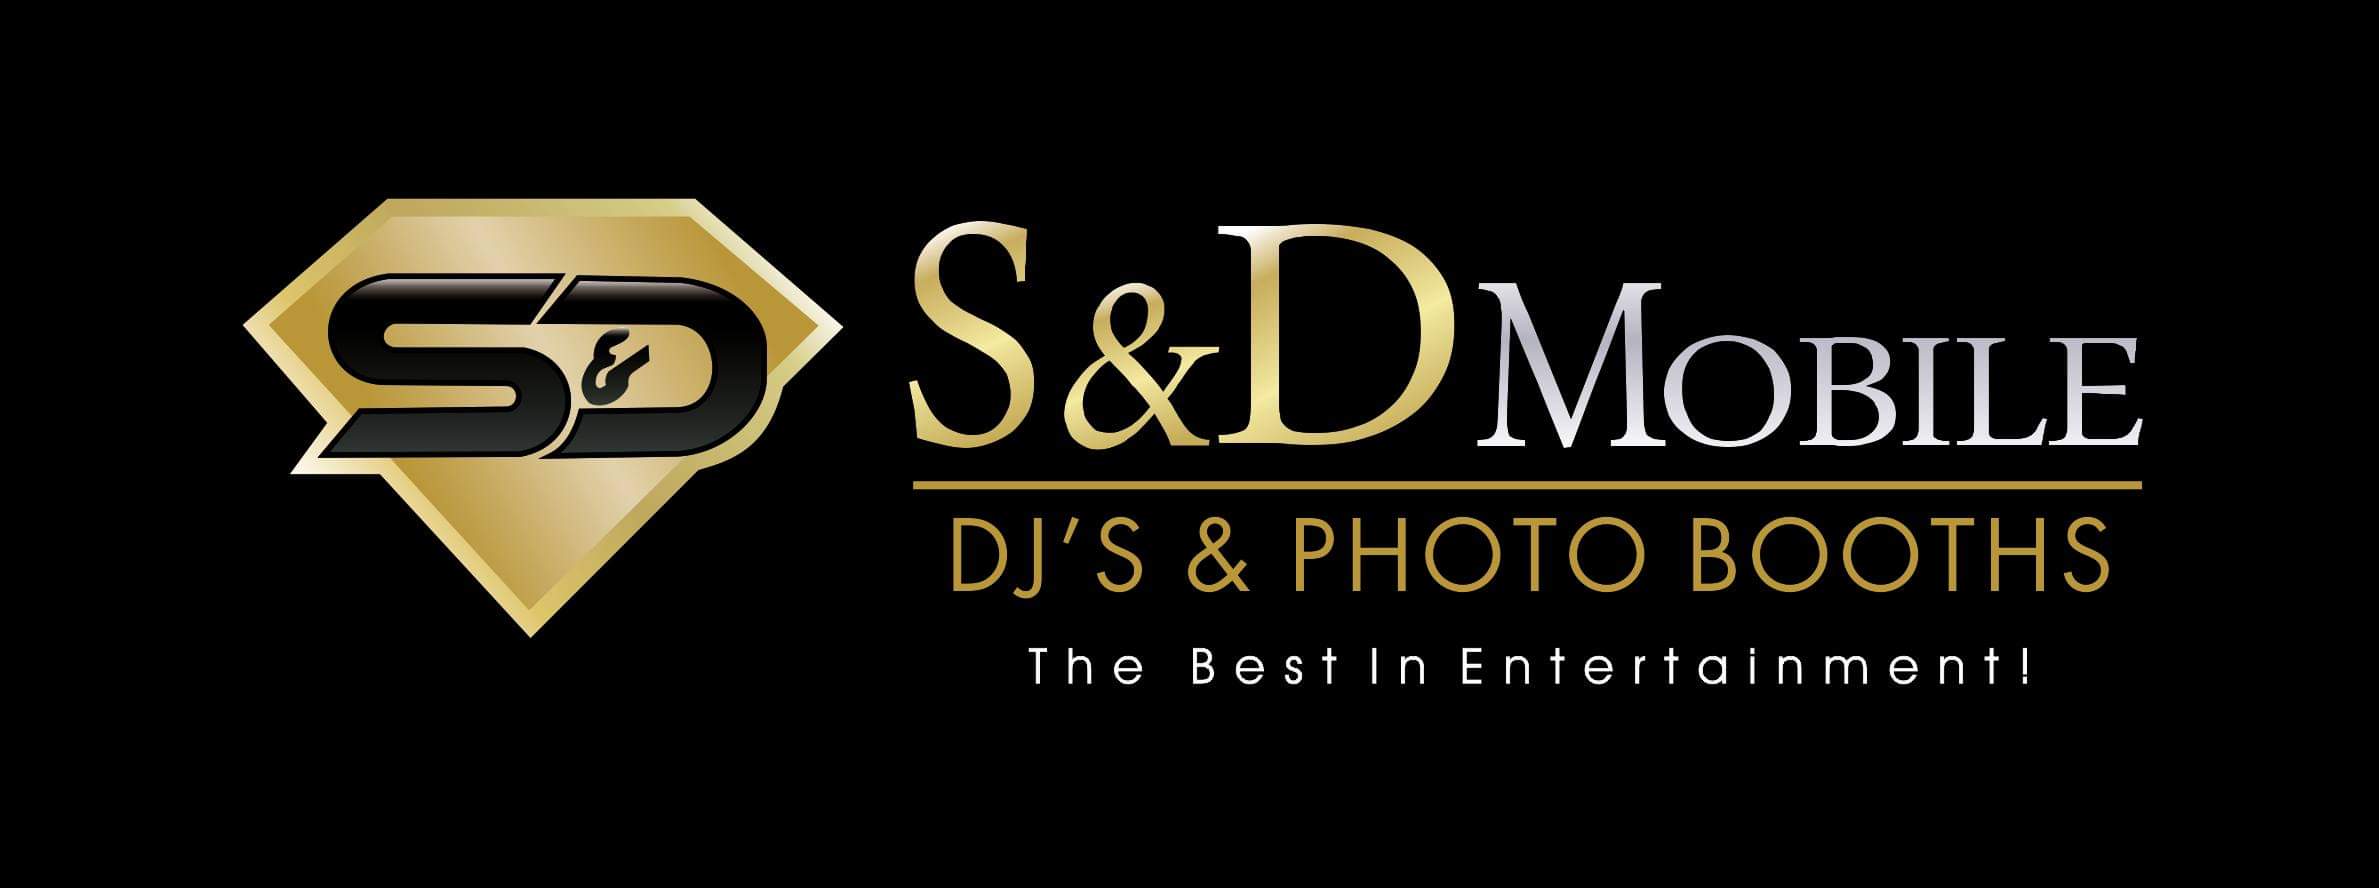 S&D Mobile DJ's